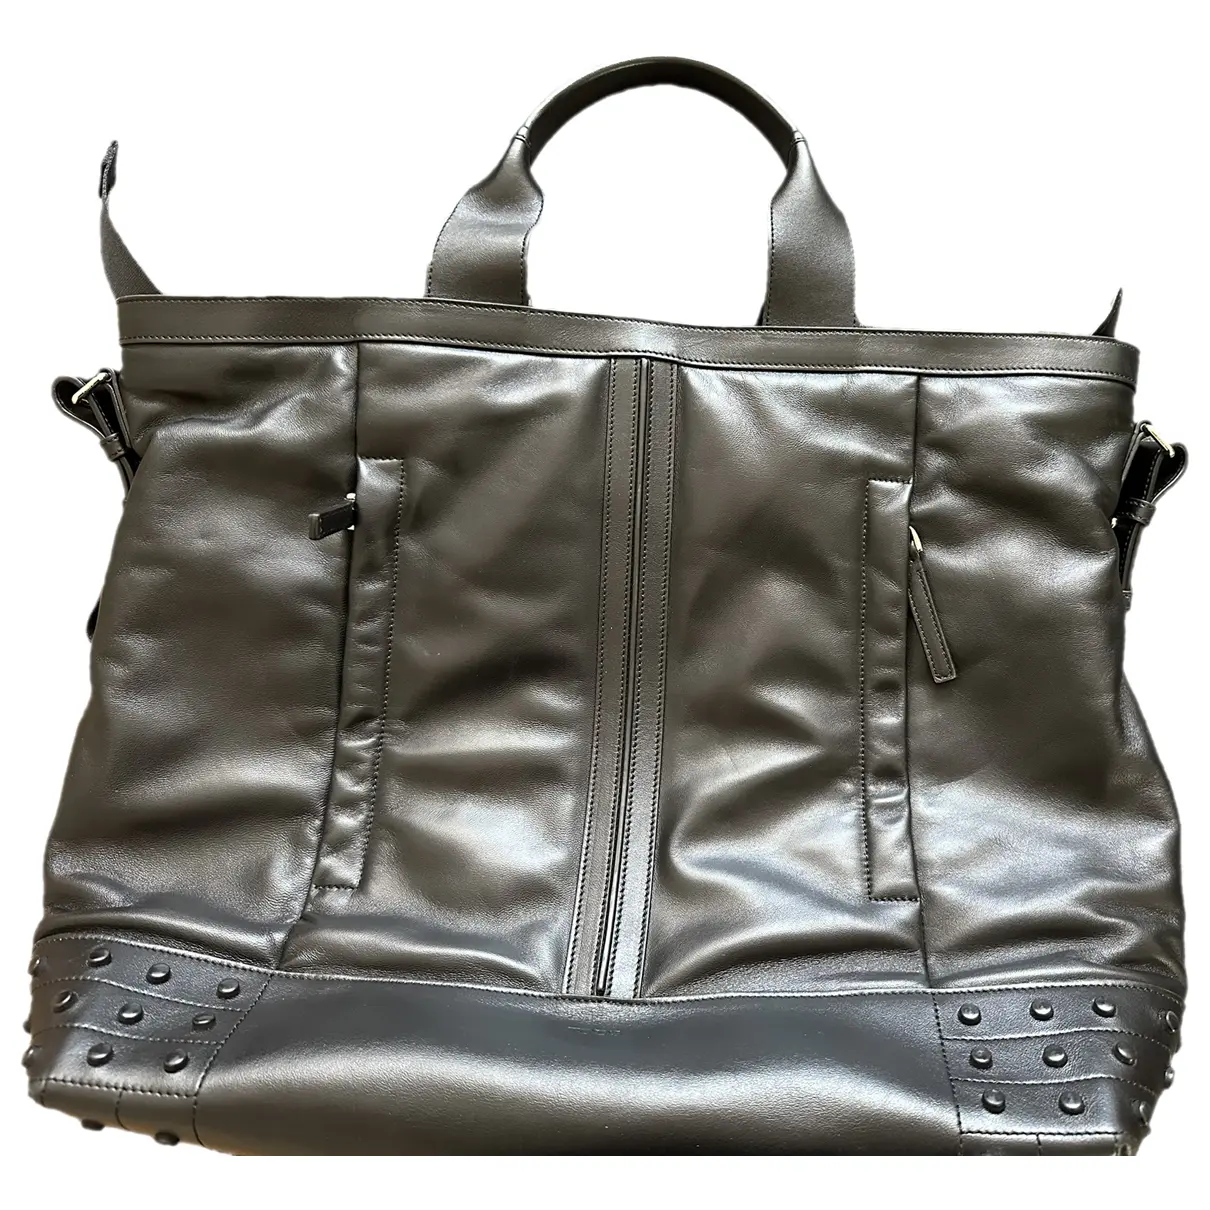 Leather weekend bag